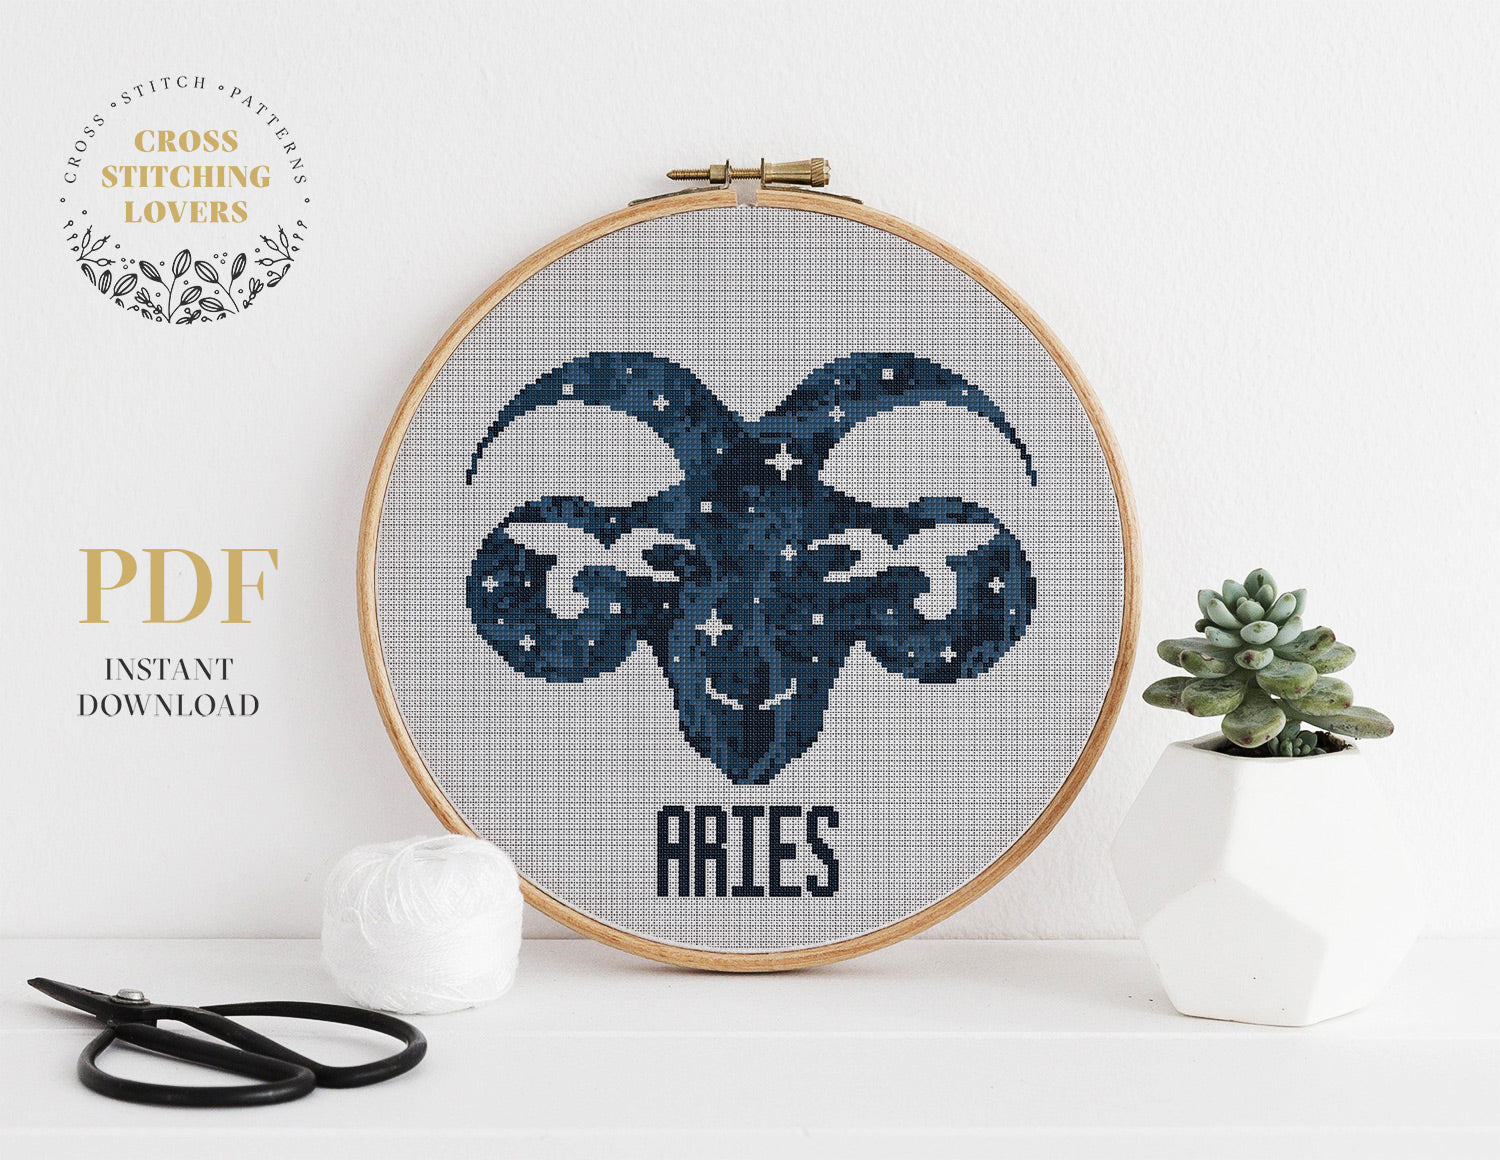 Aries zodiac sign - Cross stitch pattern